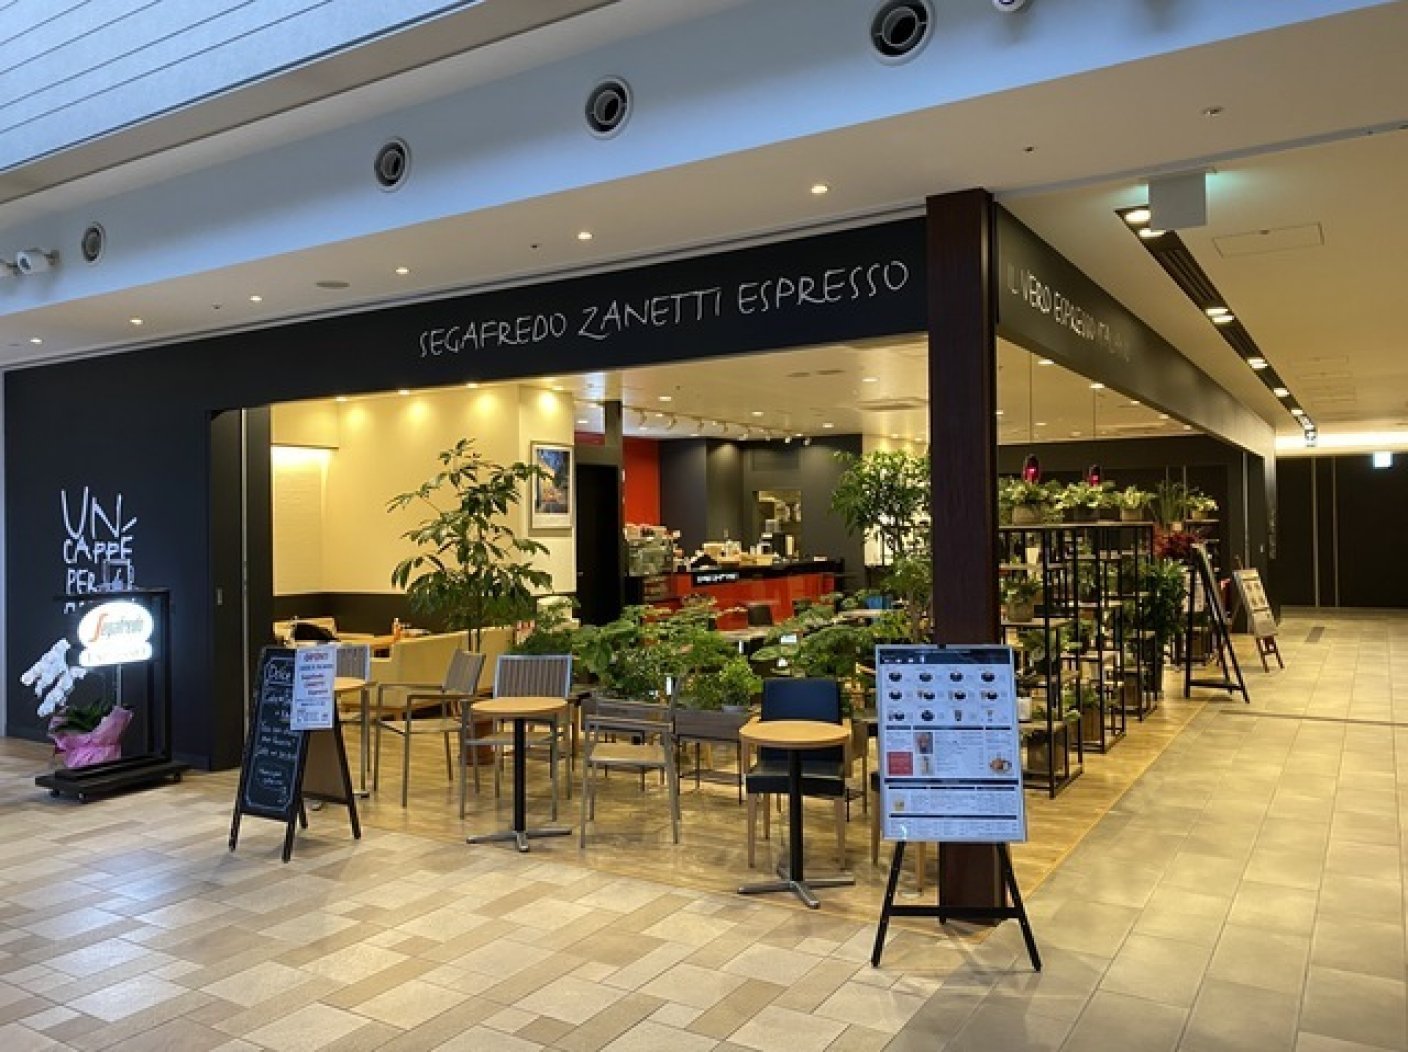  Segafredo Zanetti Espresso　仙台トラストシティの写真 1